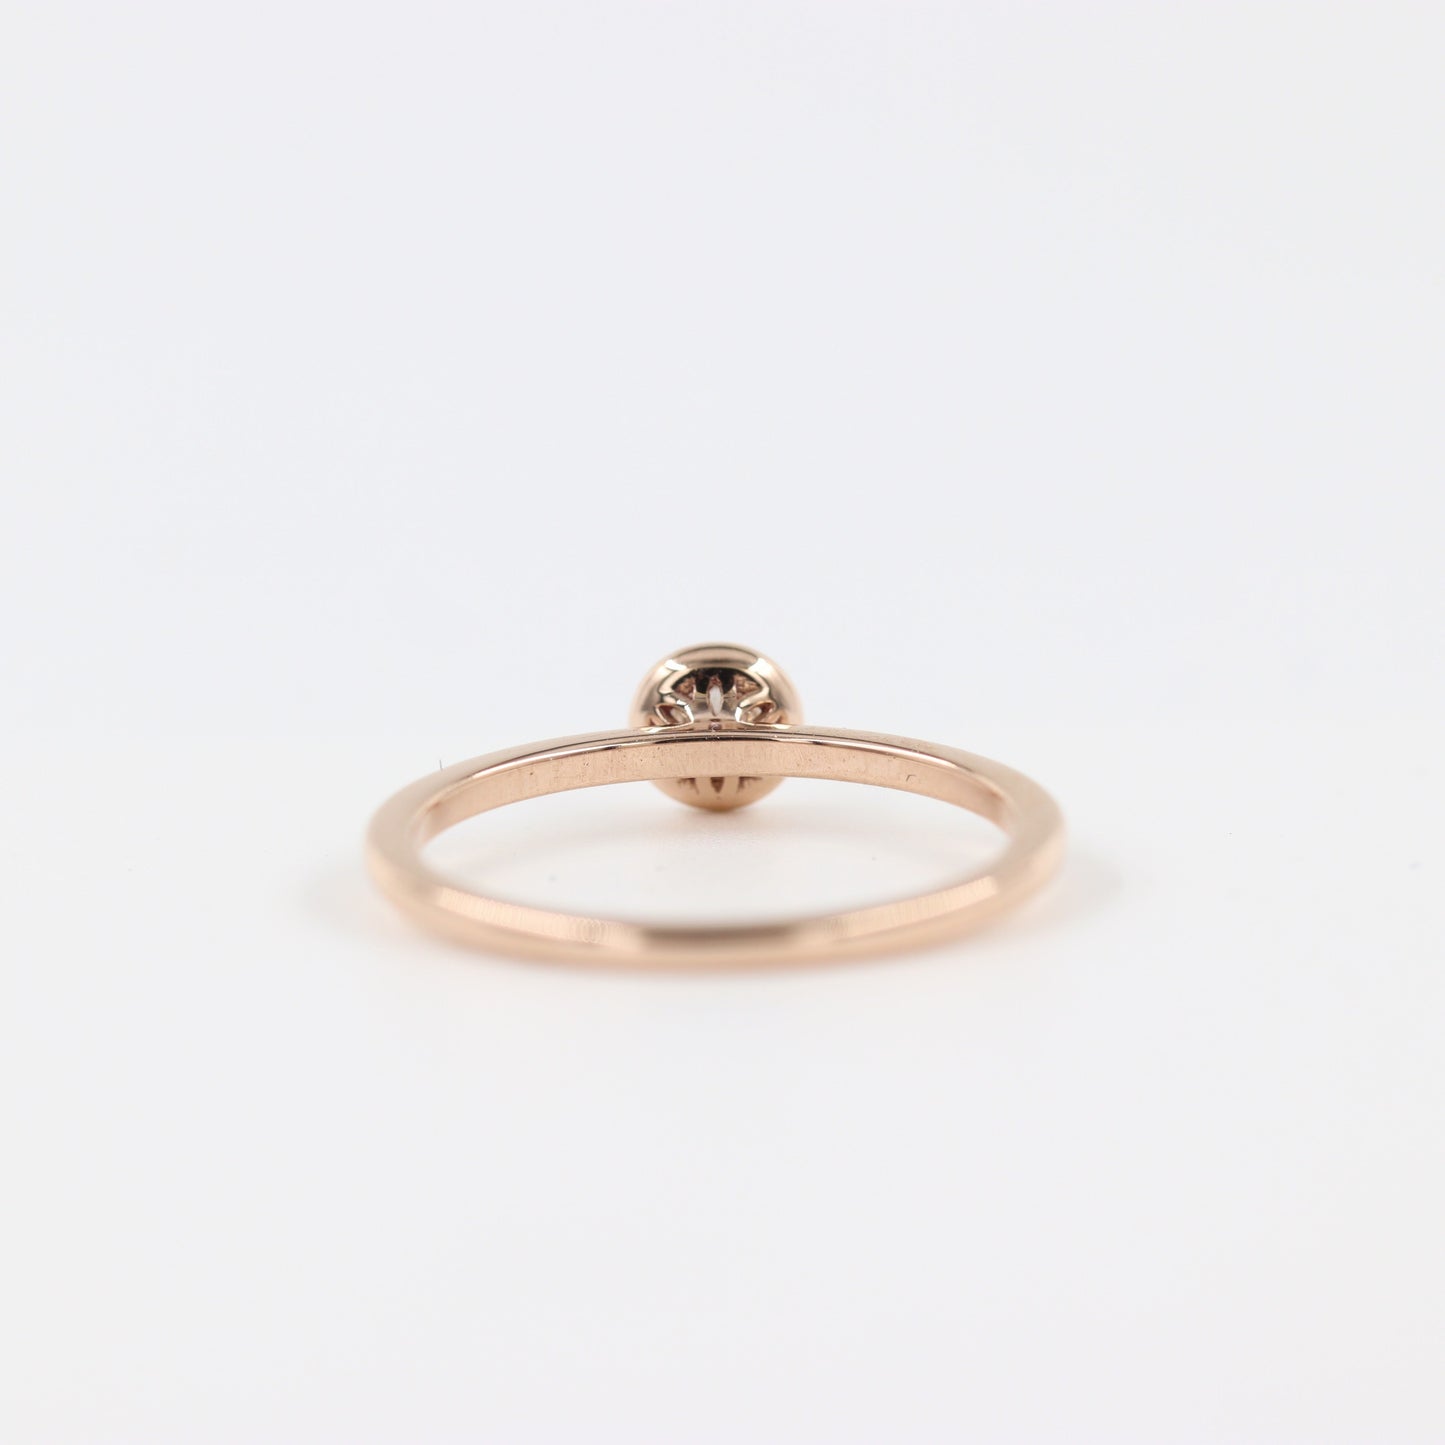 0.3ct Diamond Bezel Ring/Simple Diamond Engagement Ring/Single Natural Diamond Ring/14K gold Round Bezel Dainty Ring/anniversary Gift